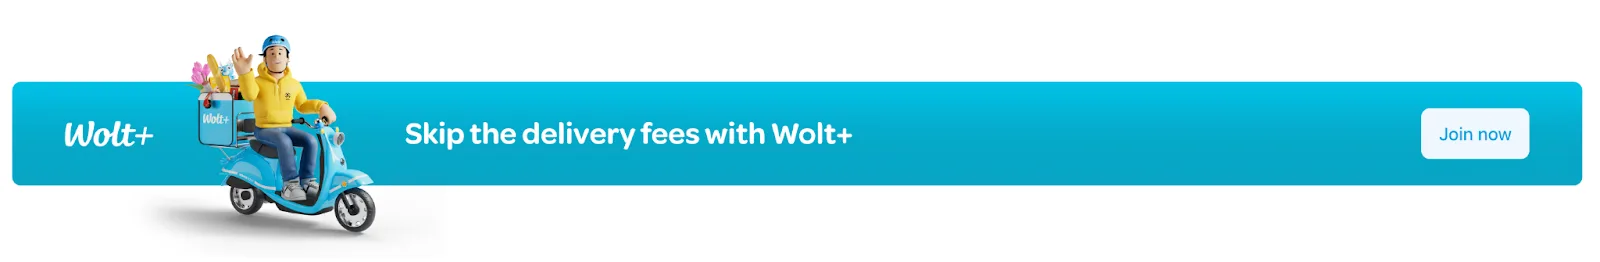 Wolt+ promotion banner